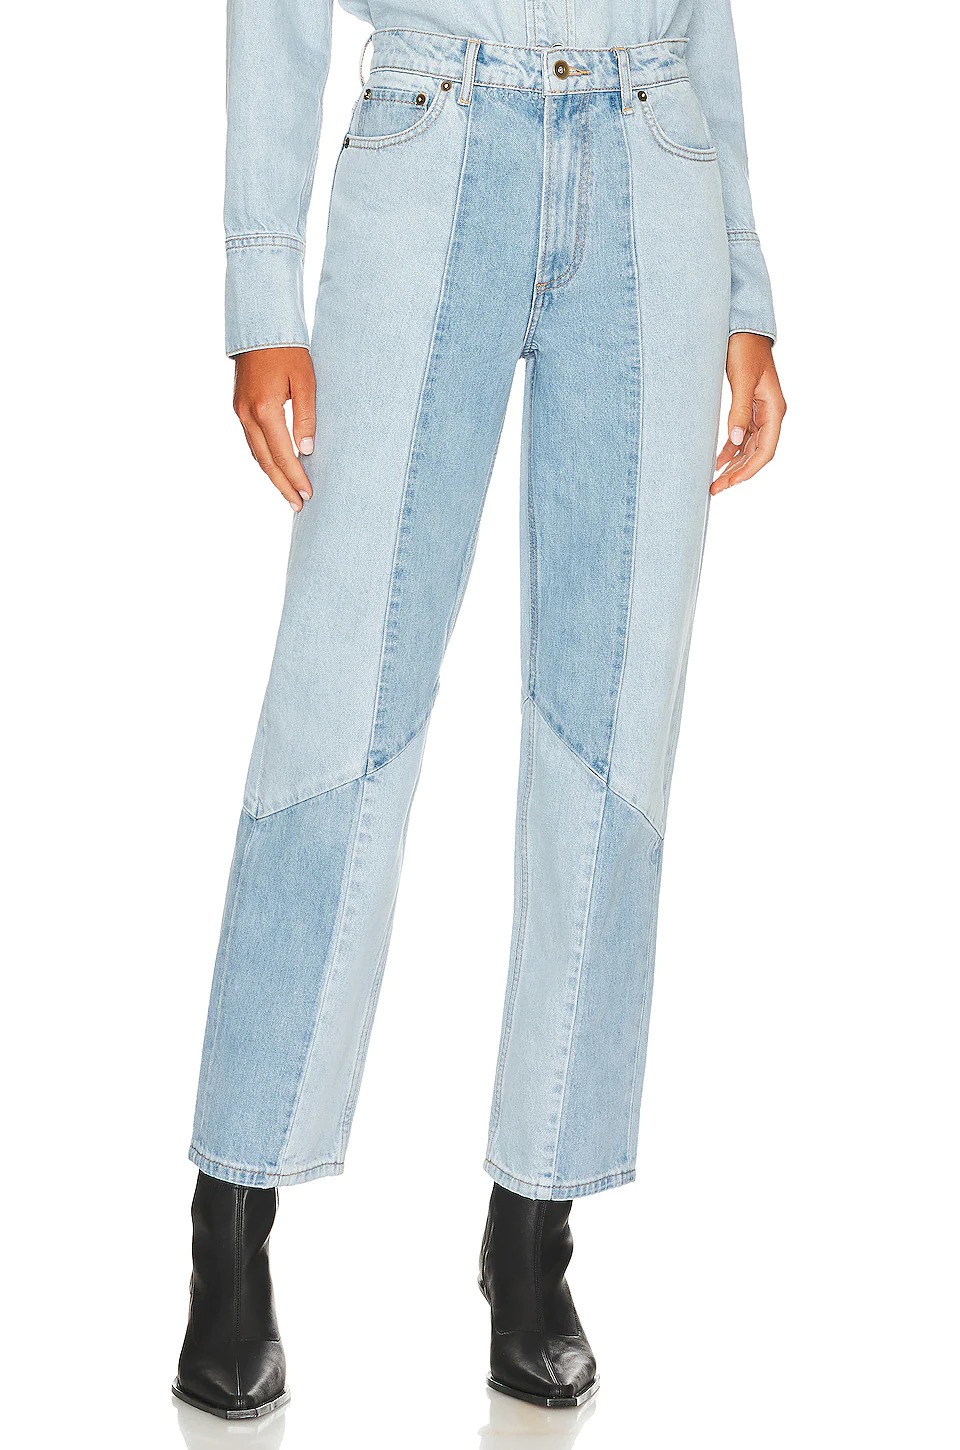 PHENNY23SS Vintagedenim big jeans